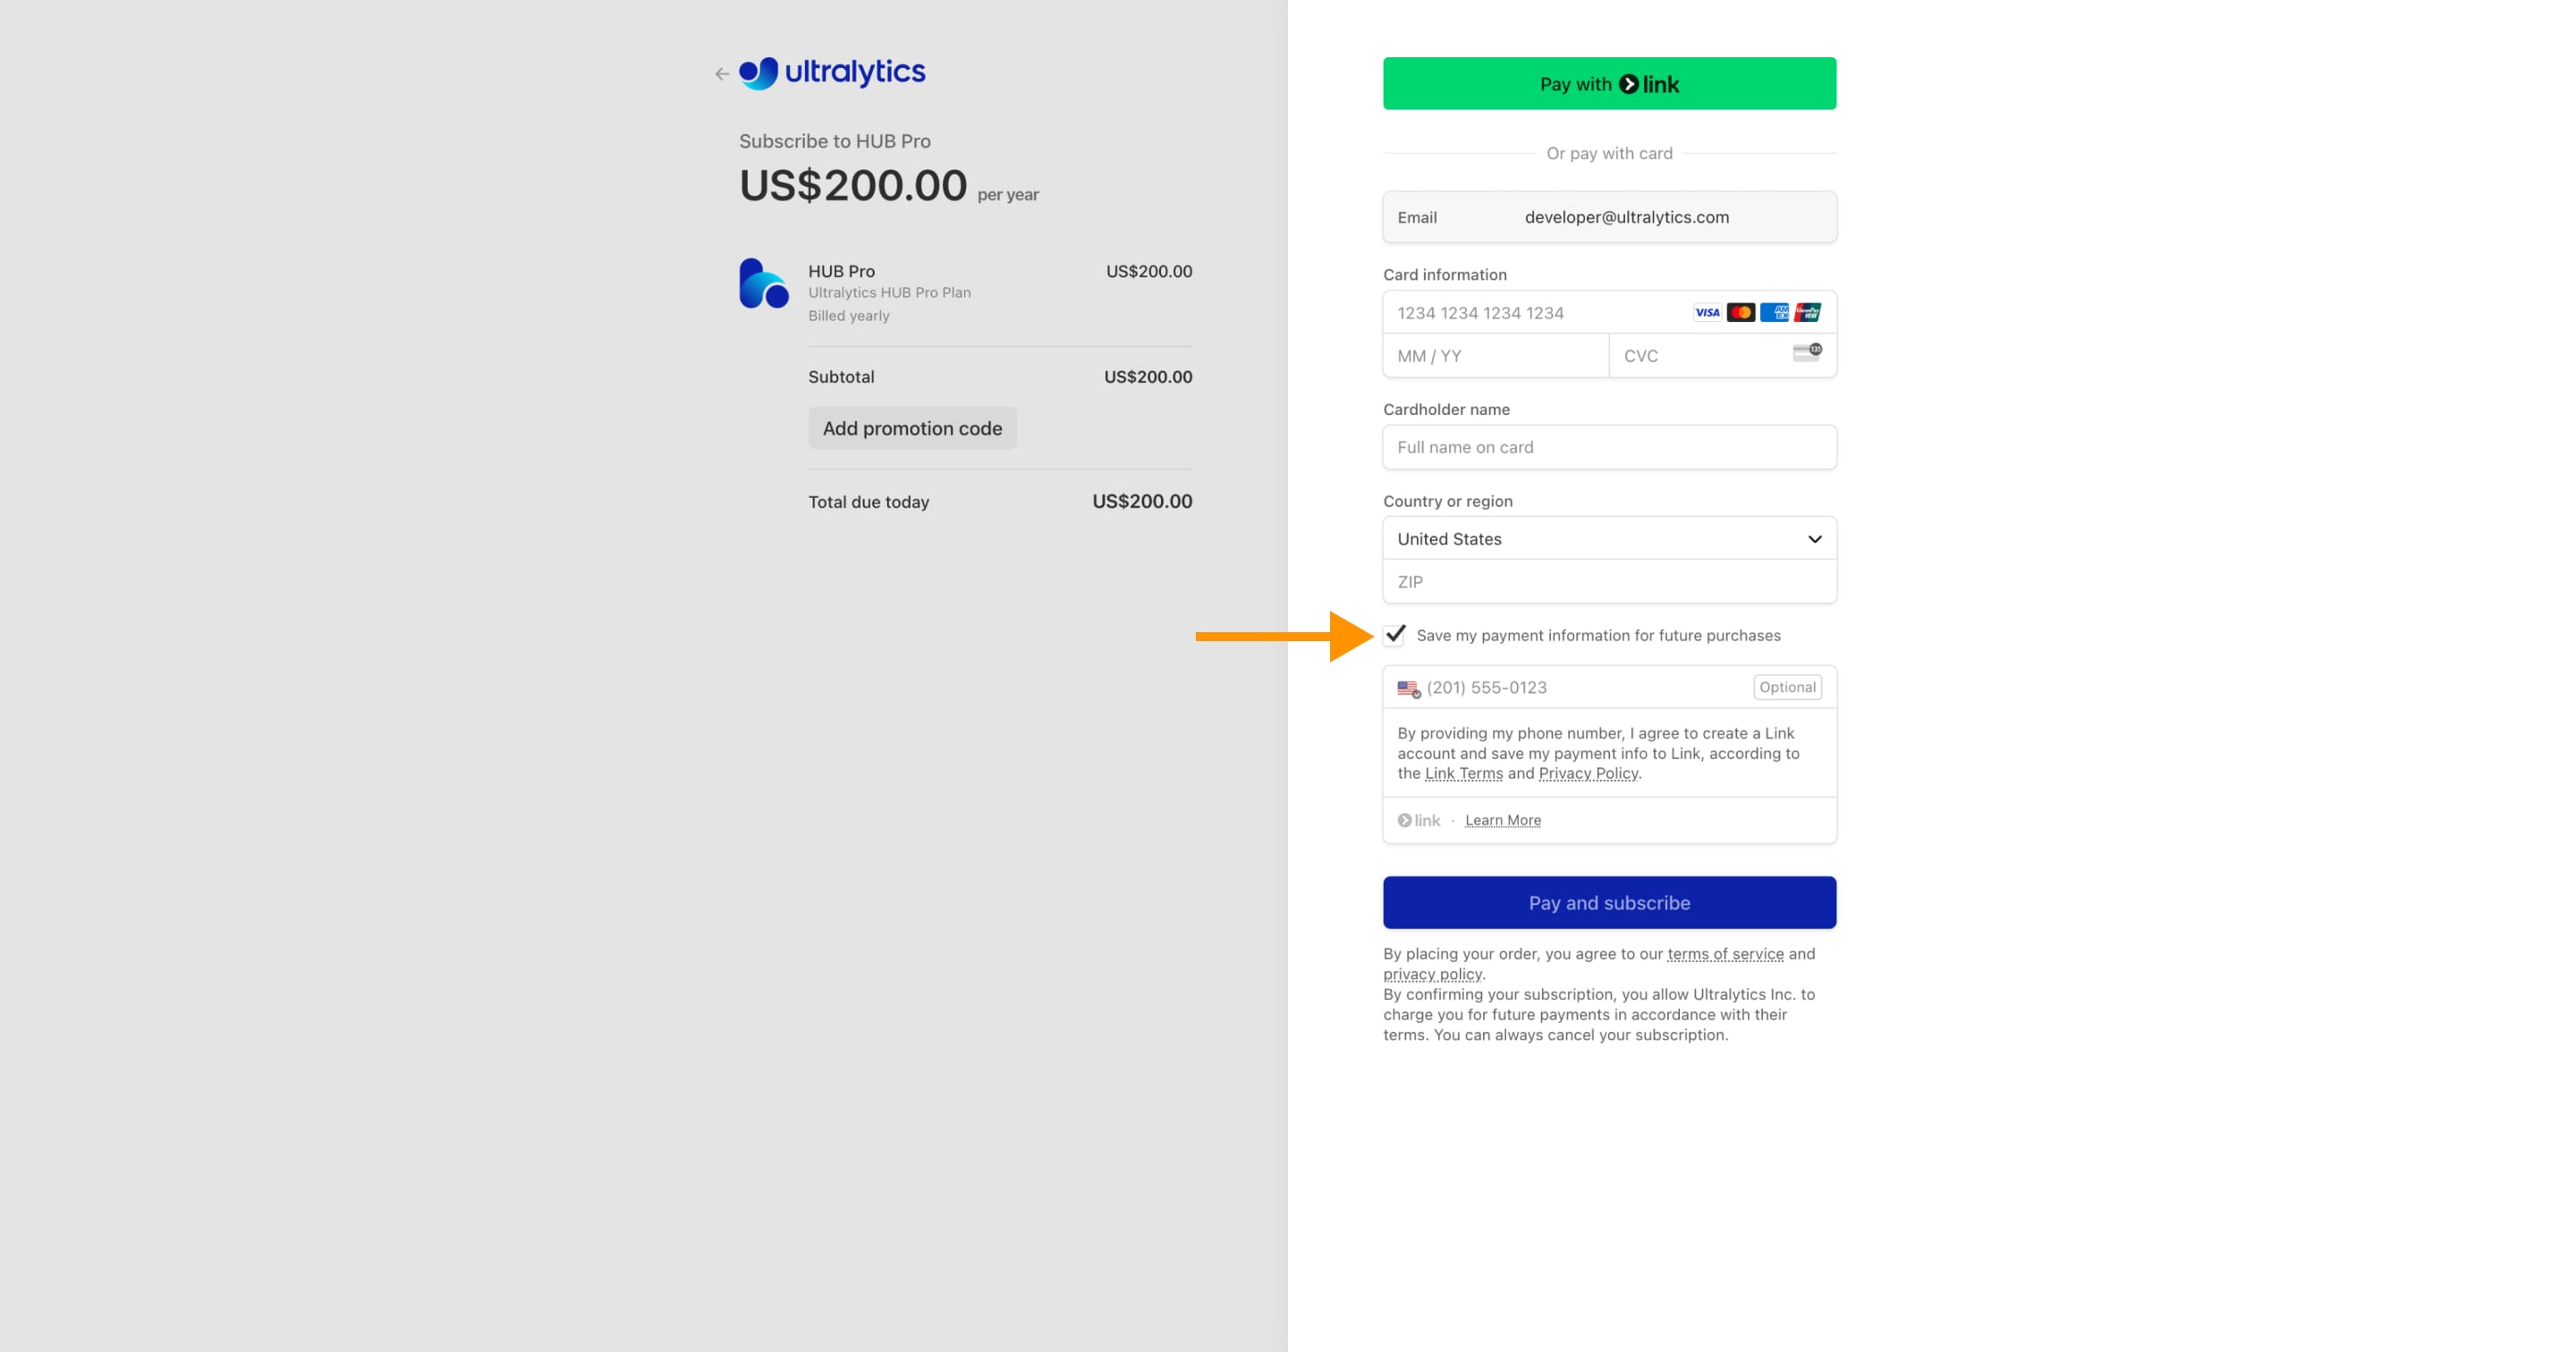 Ultralytics لقطة شاشة HUB لصفحة الدفع مع سهم يشير إلى خانة الاختيار لحفظ معلومات الدفع لعمليات الشراء المستقبلية